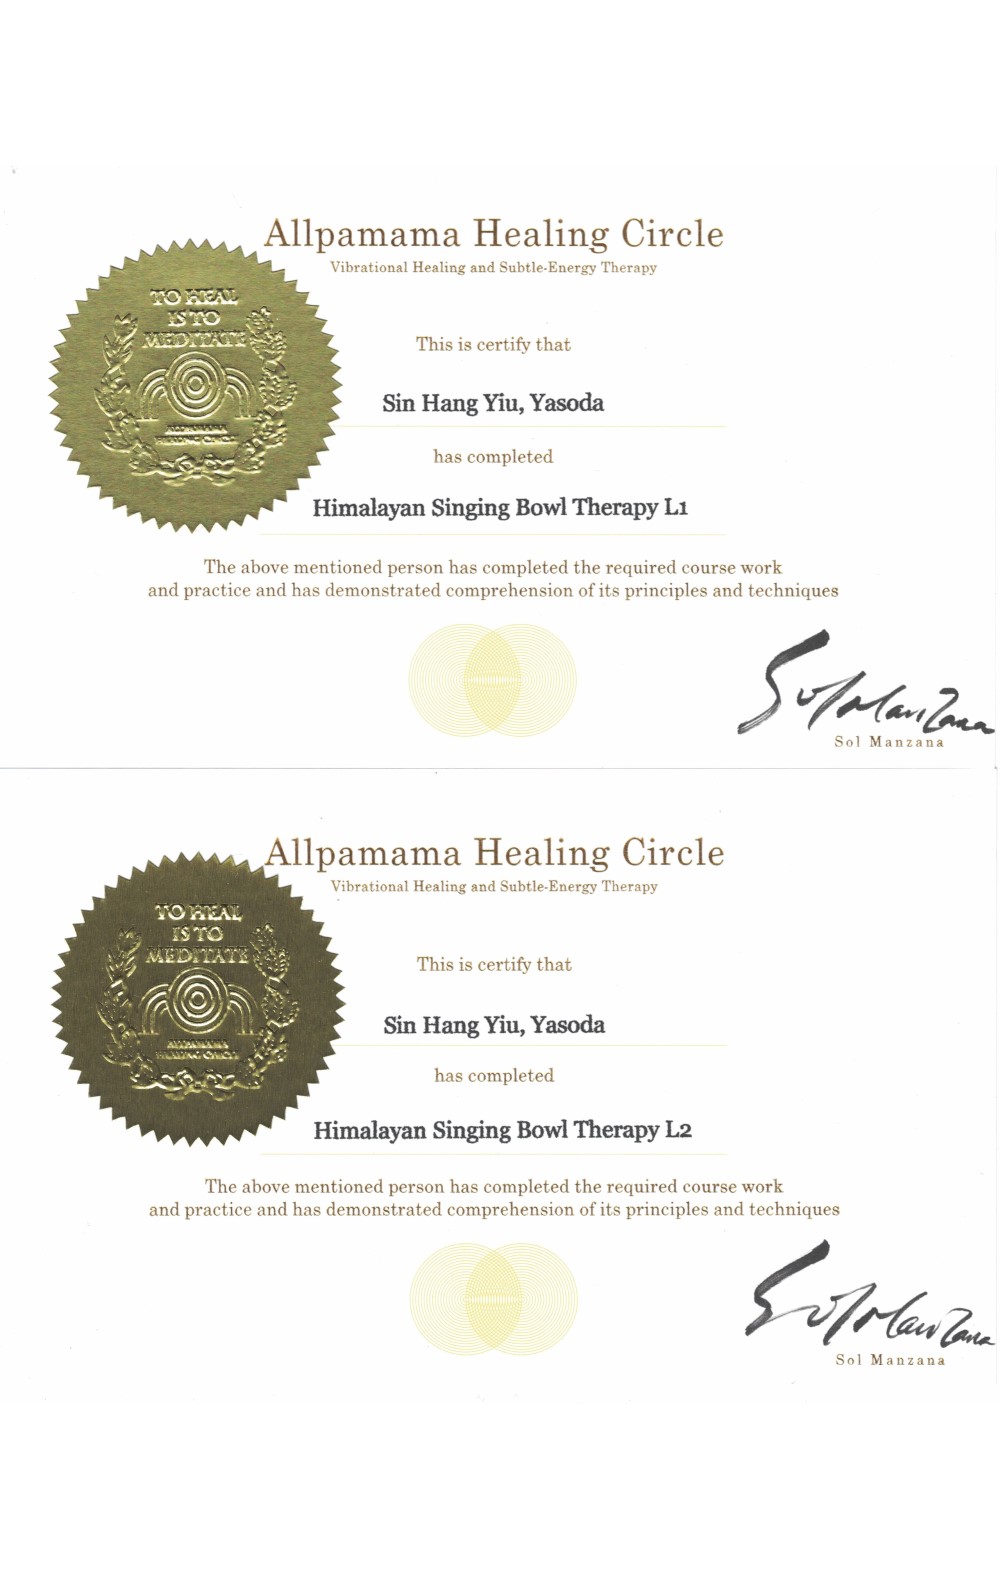 Yasoda獲得香港著名的頌缽療法導師曾文通的Himalayan Singing Bowl Therapy專業認證